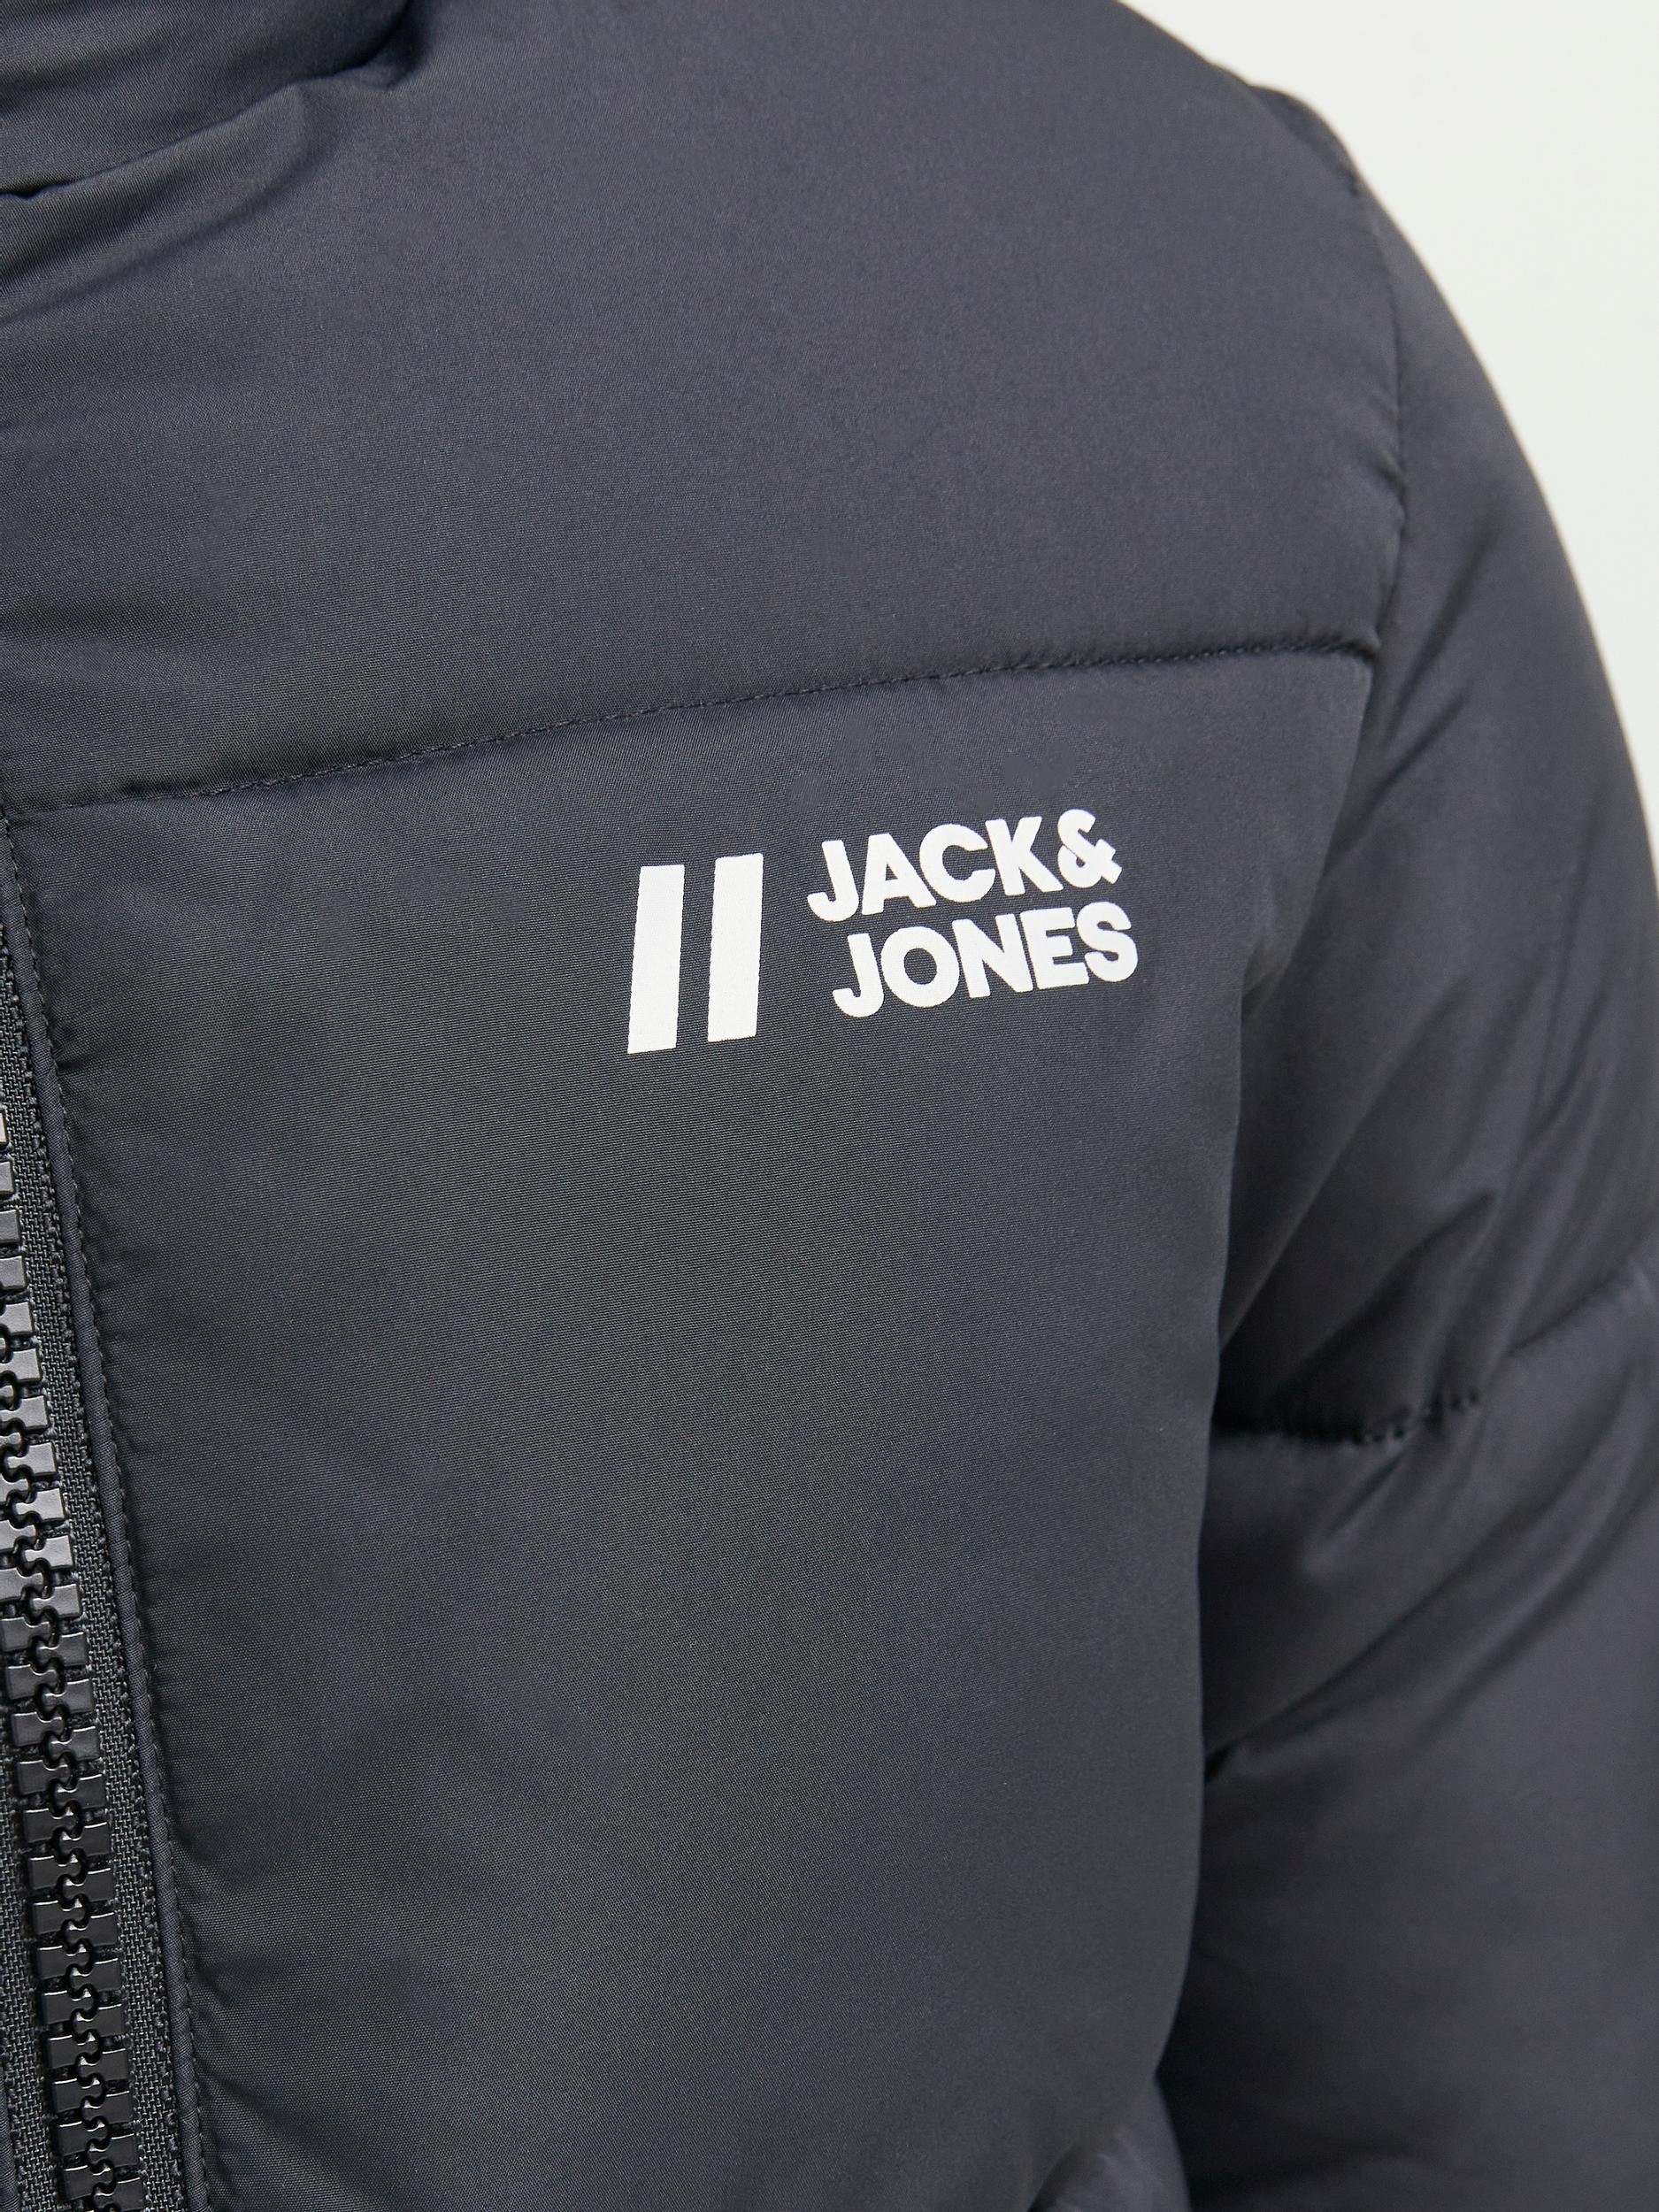 Jones Black Junior Jack & Steppjacke